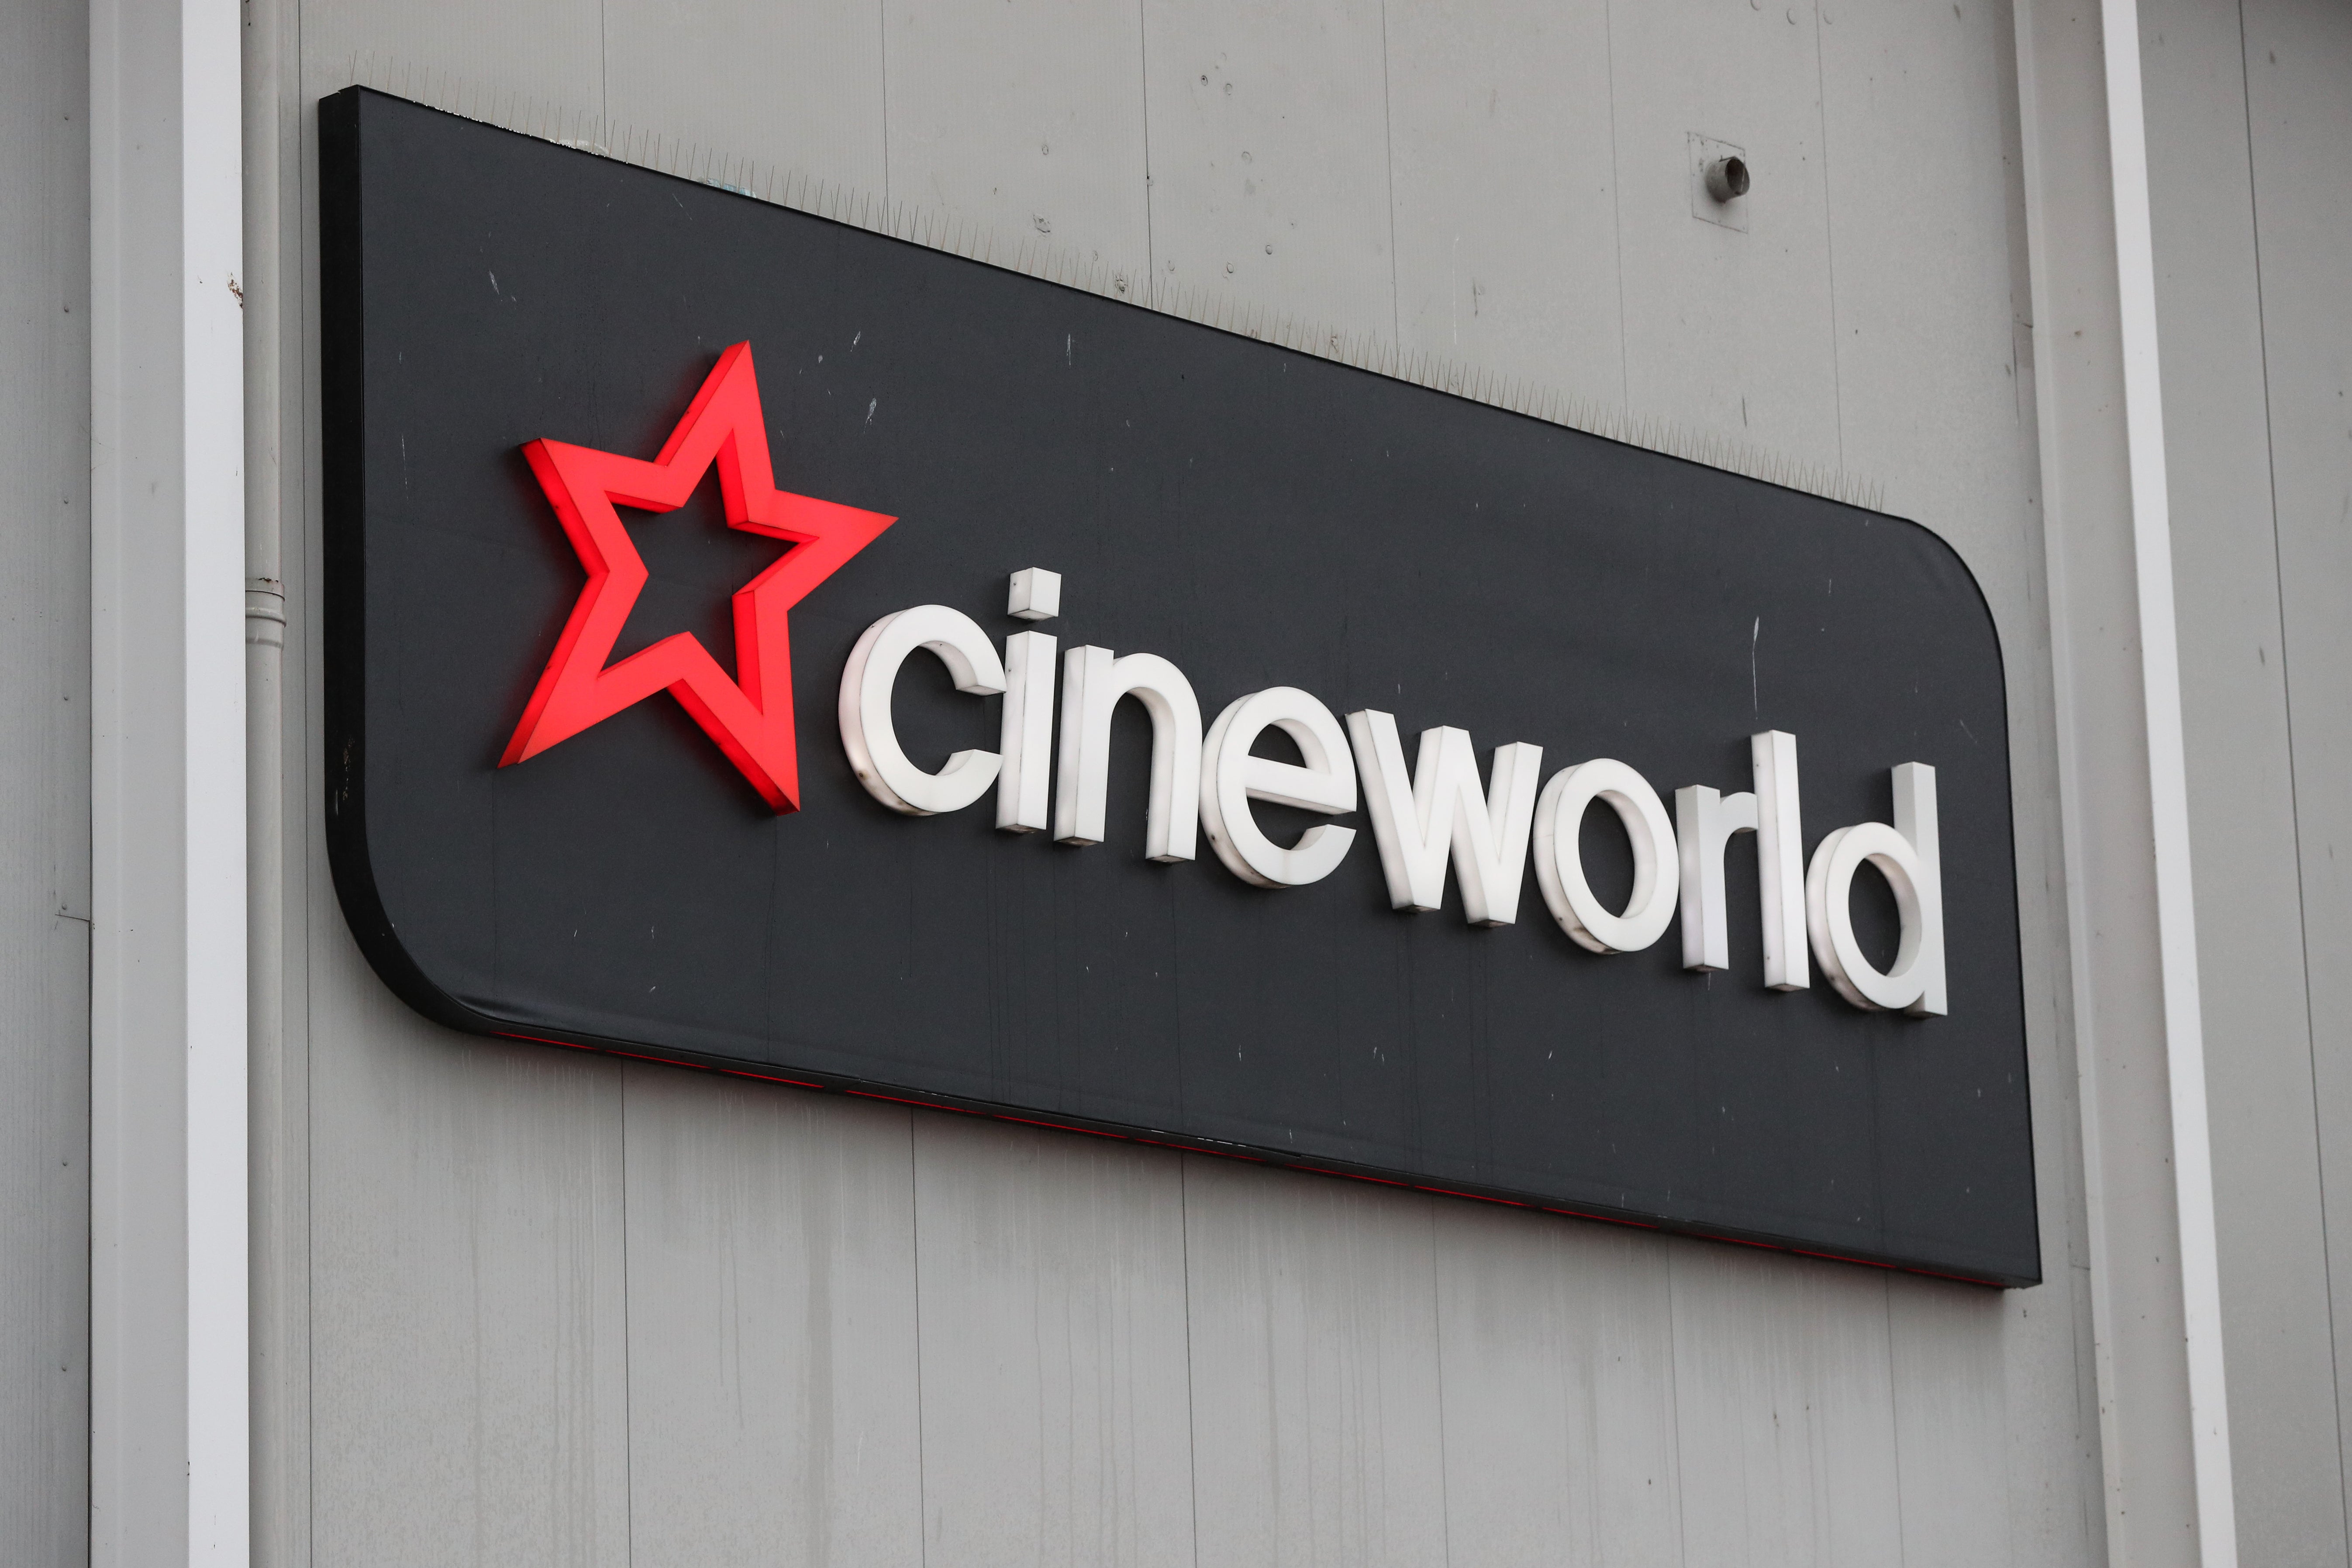 Cineworld employs around 28,000 workers globally